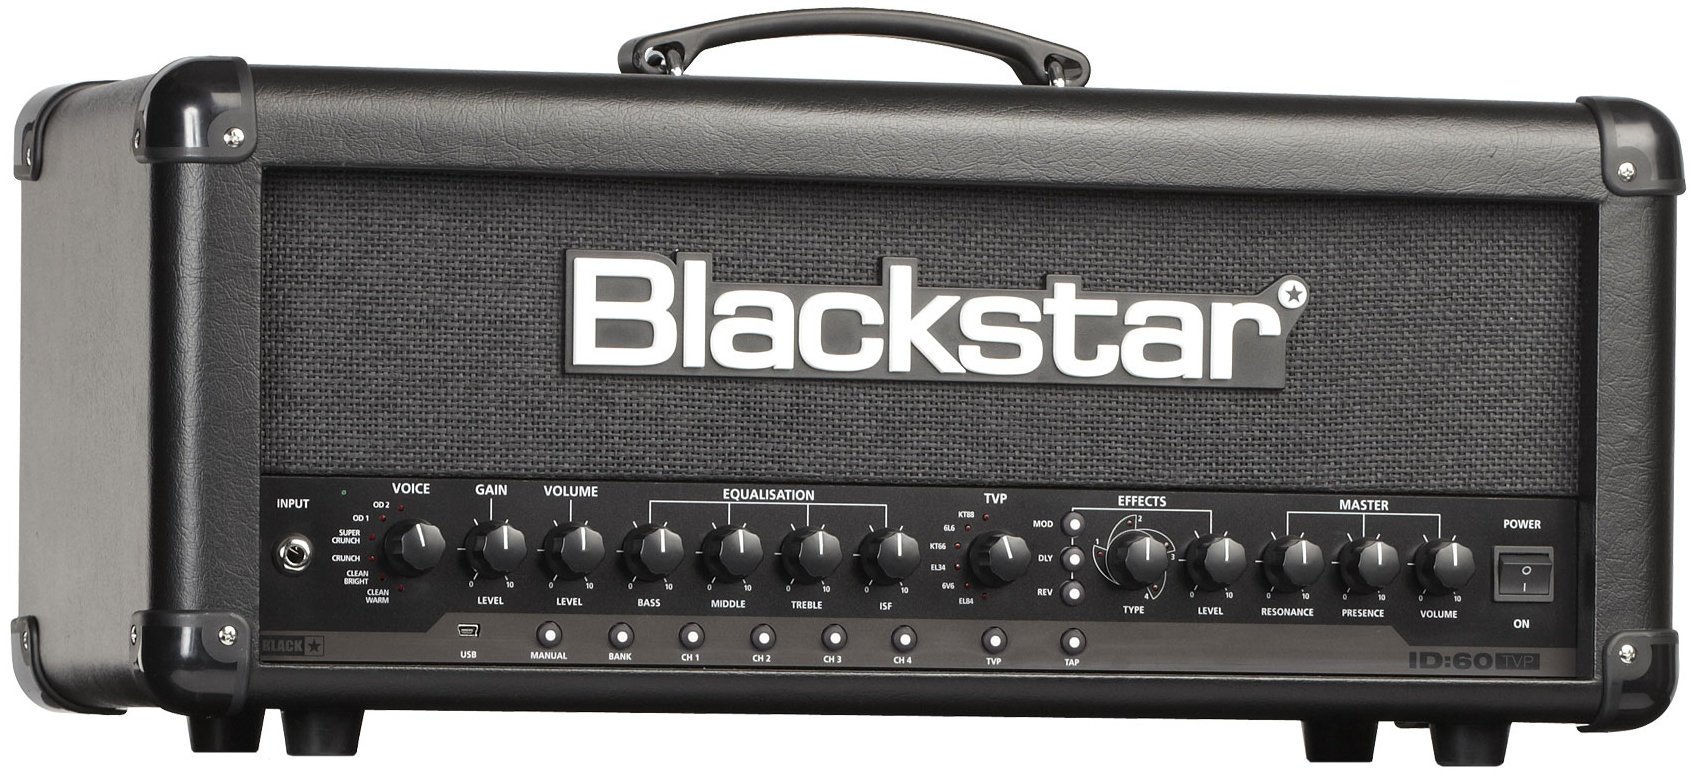 Modeling Guitar Amplifier Blackstar ID: 60 TVP-H